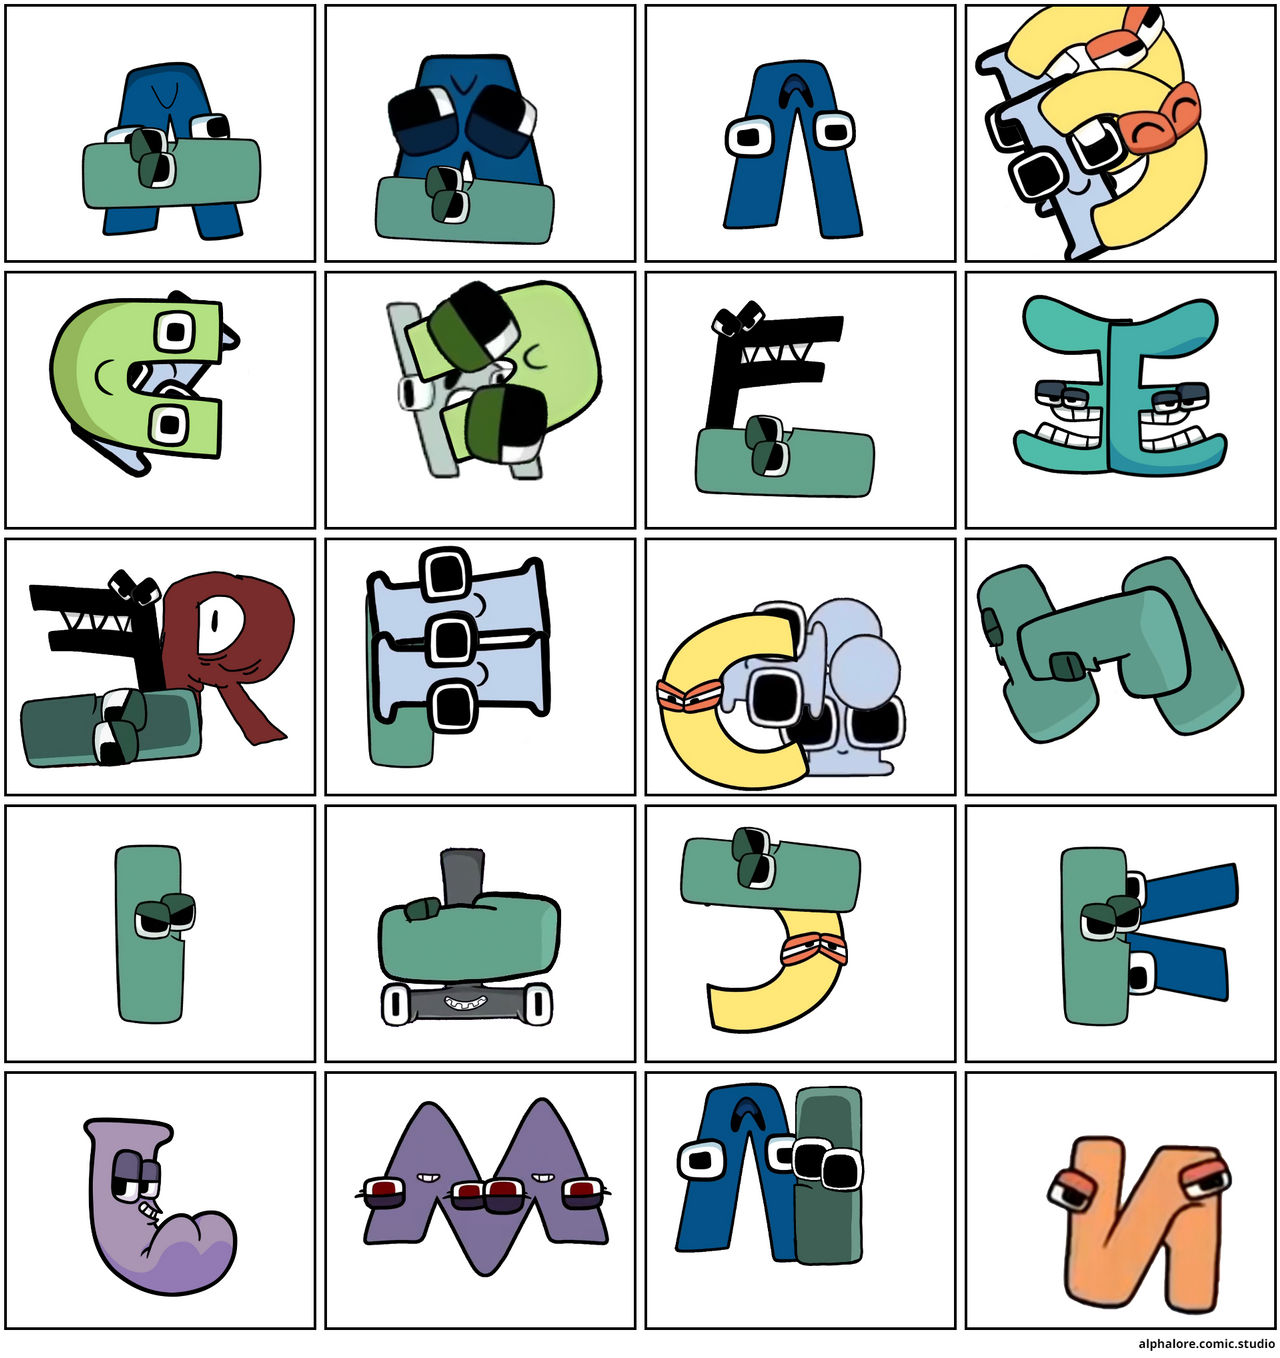 unifon alphabet lore 4 by EvanArts2011 on DeviantArt